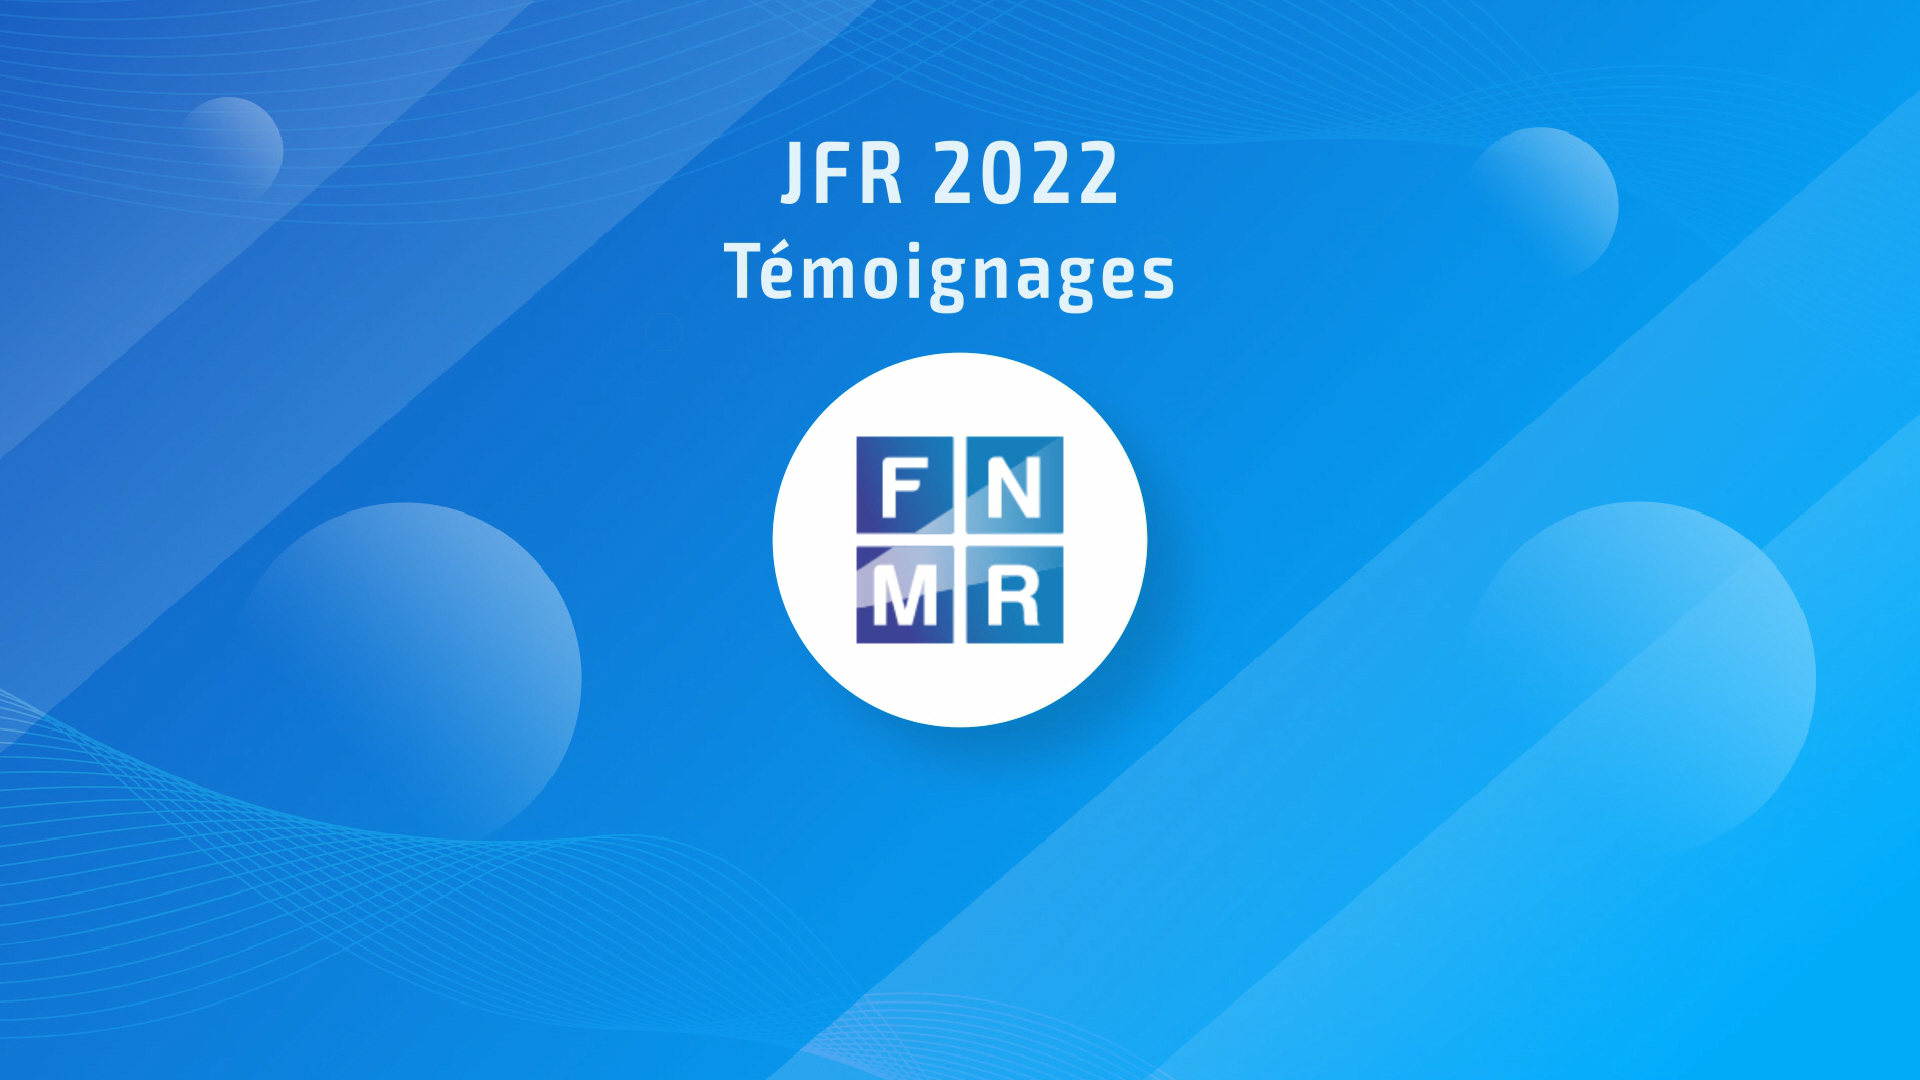 FNMR - JFR